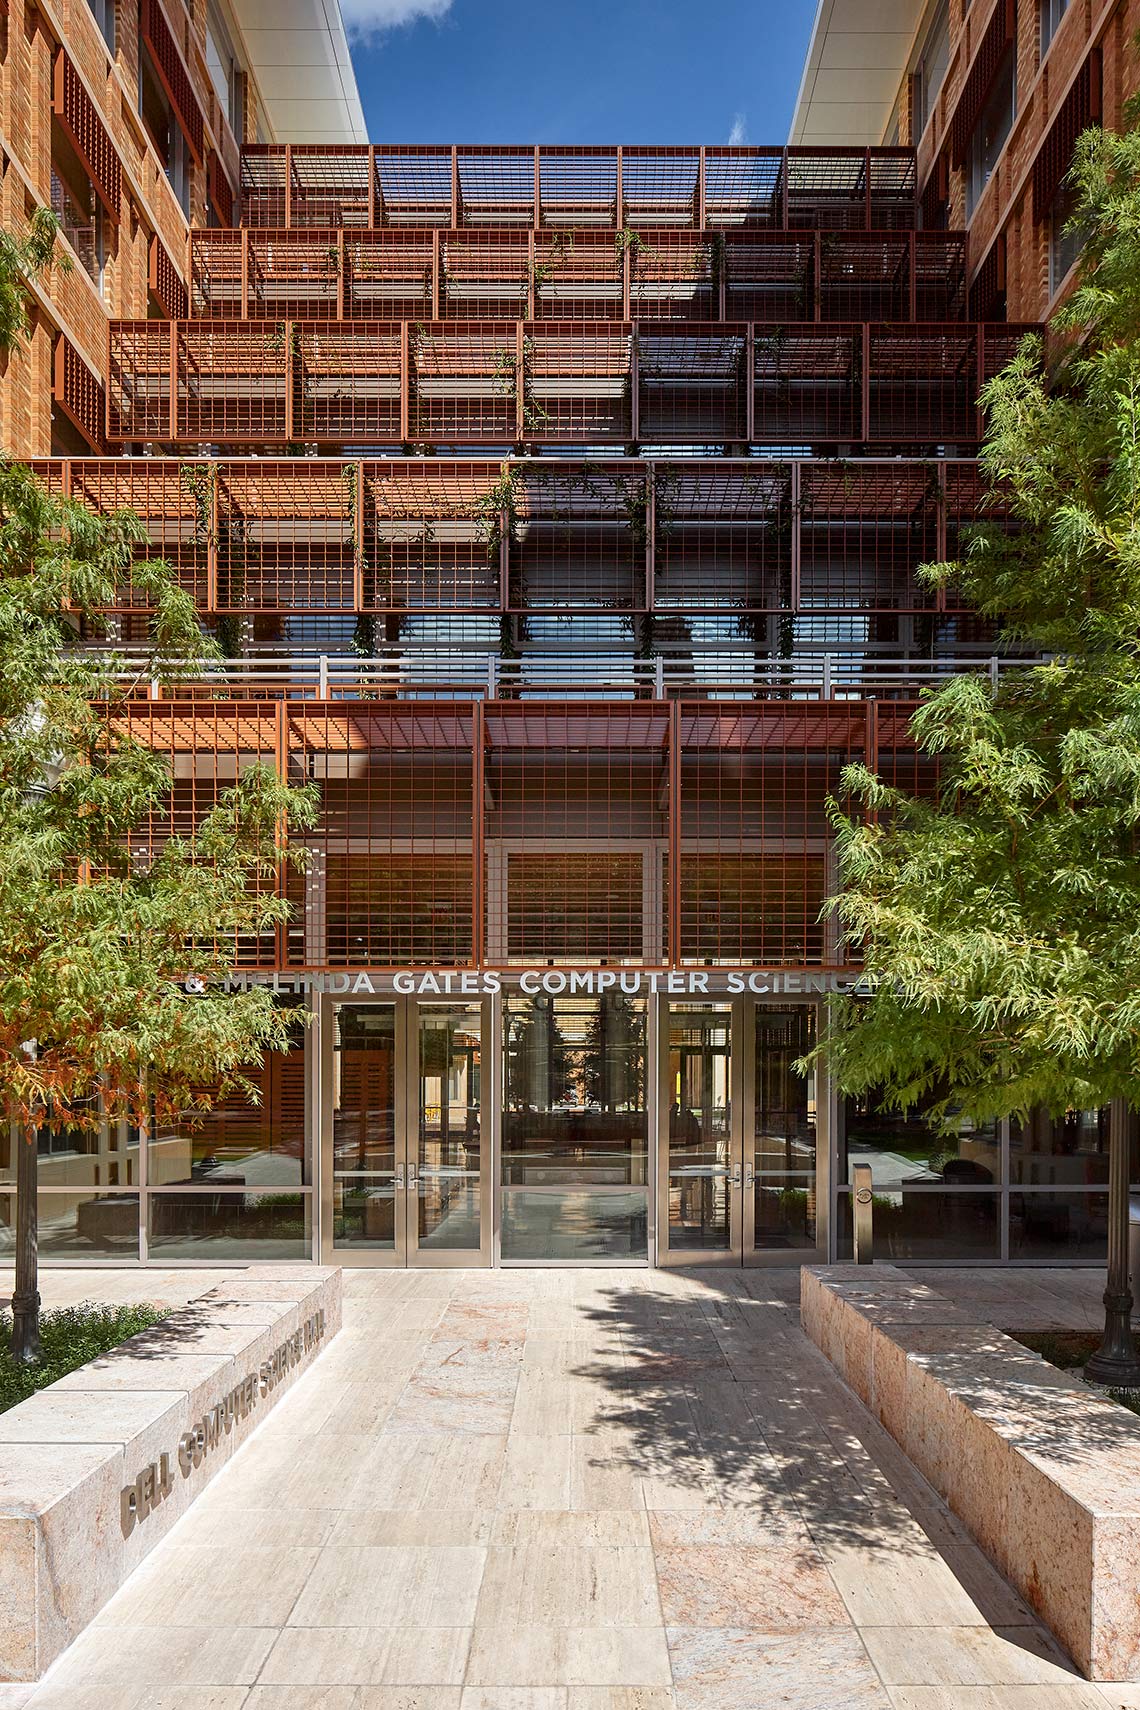 Bill and Malinda Gates Building at the University of Texas Austin